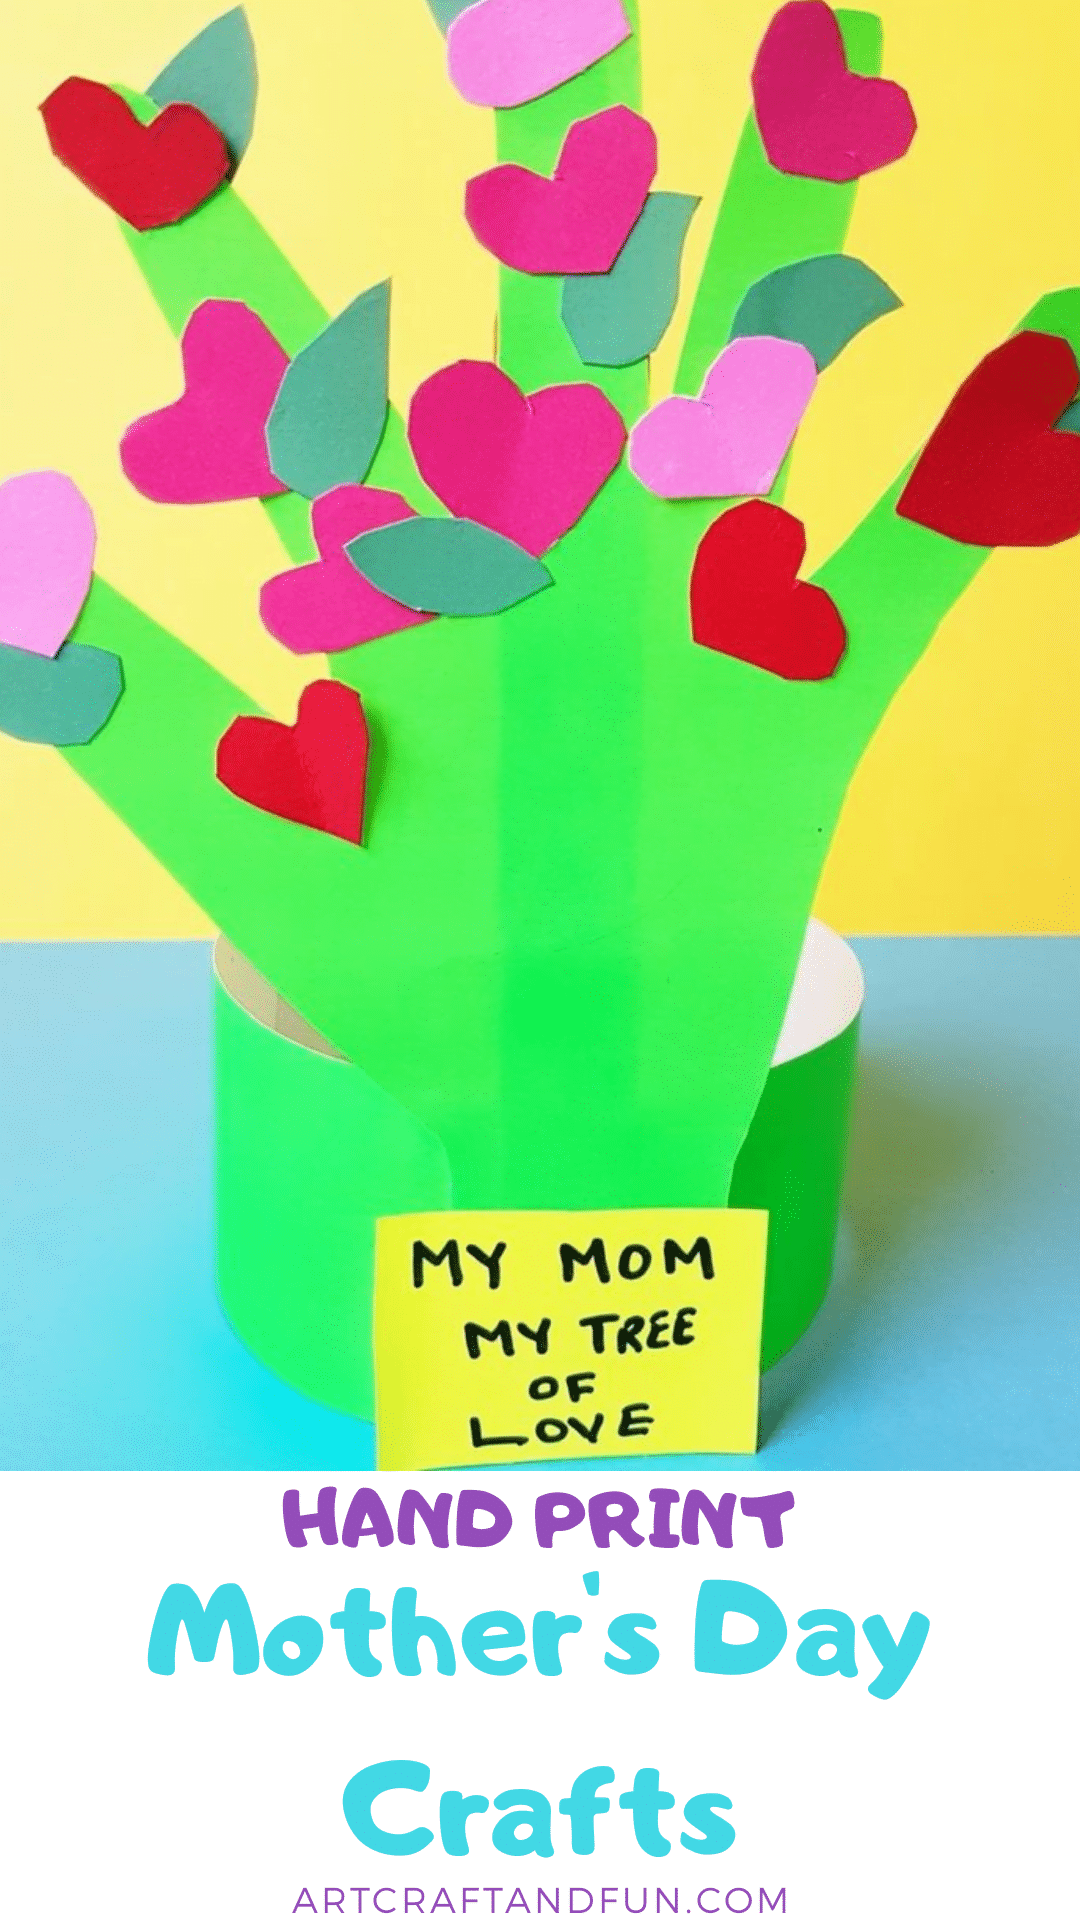 My Mom: My Tree of Love